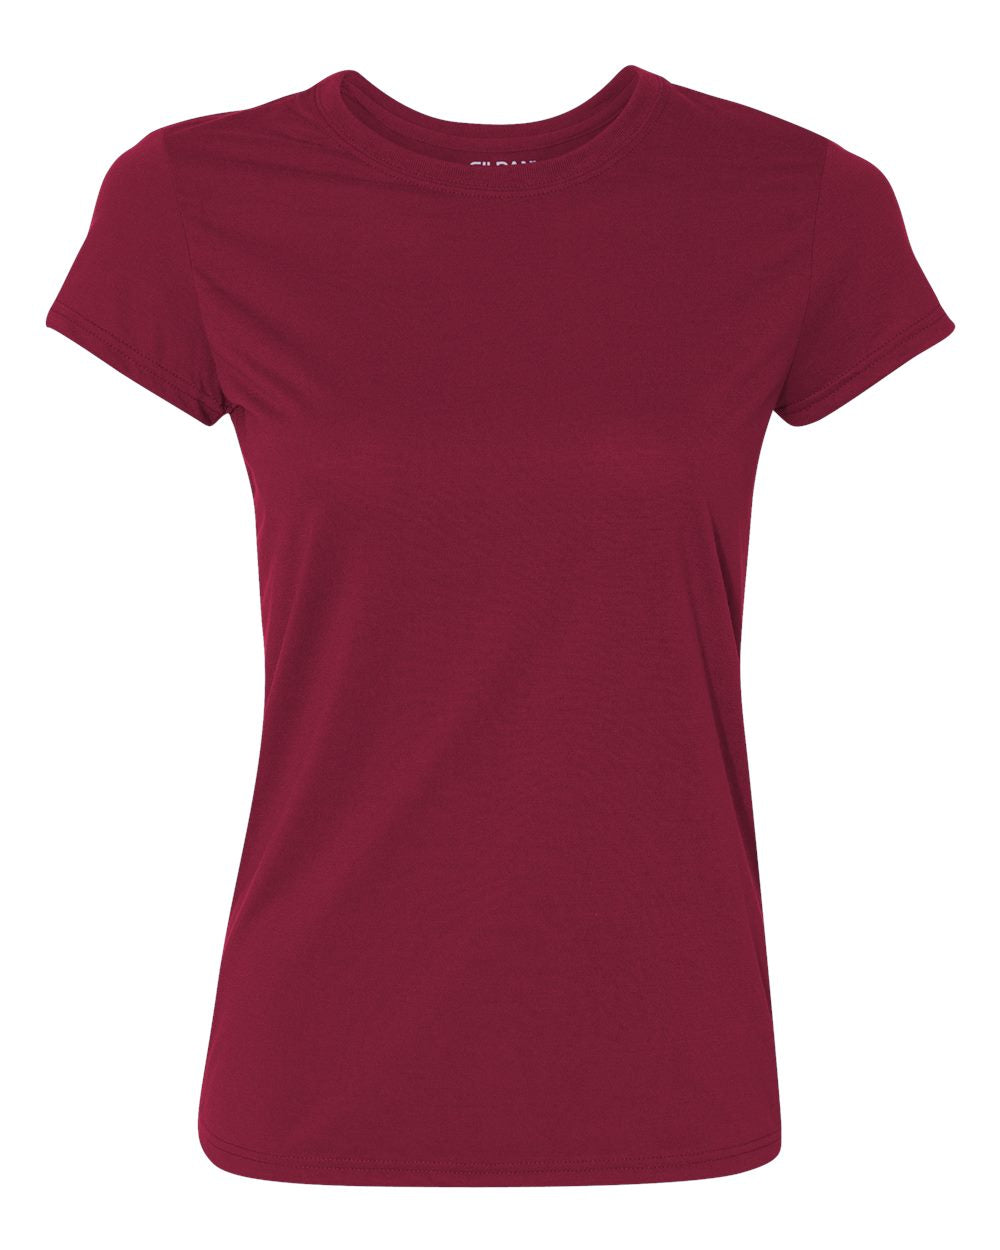 Gildan Performance® Women’s T-Shirt 42000L #color_Cardinal Red